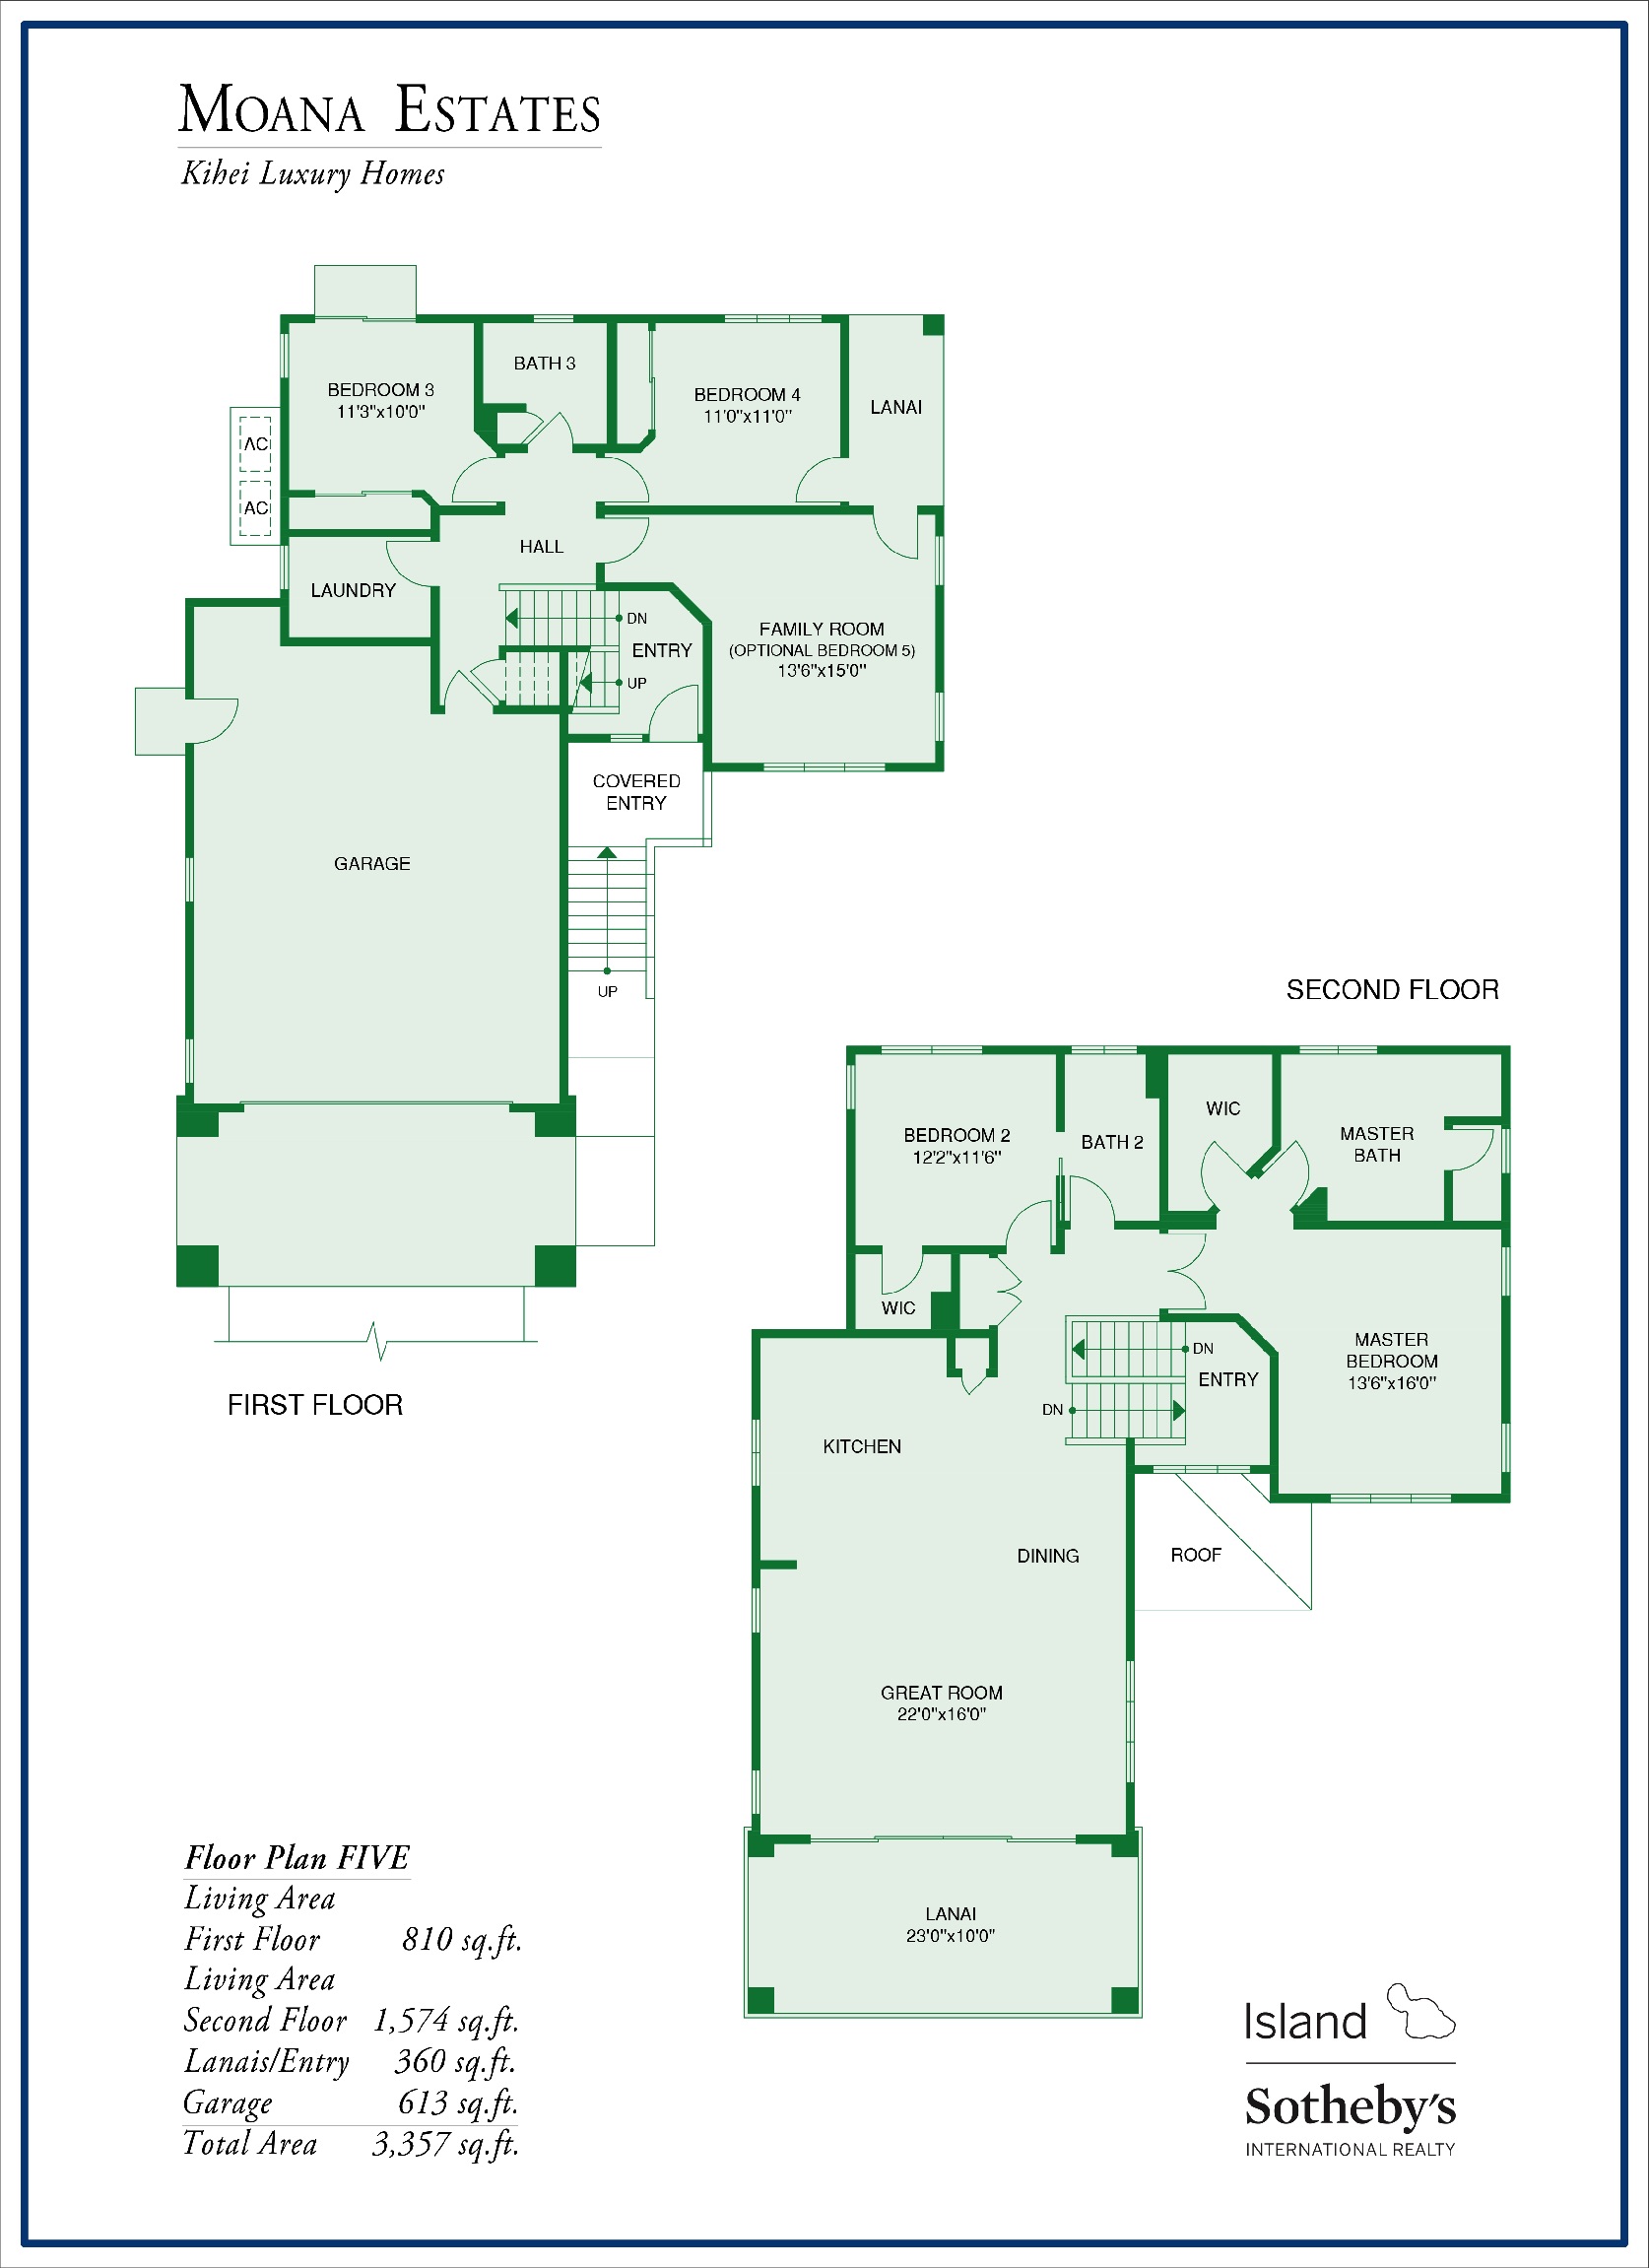 Moana Estates Floor Plan 5